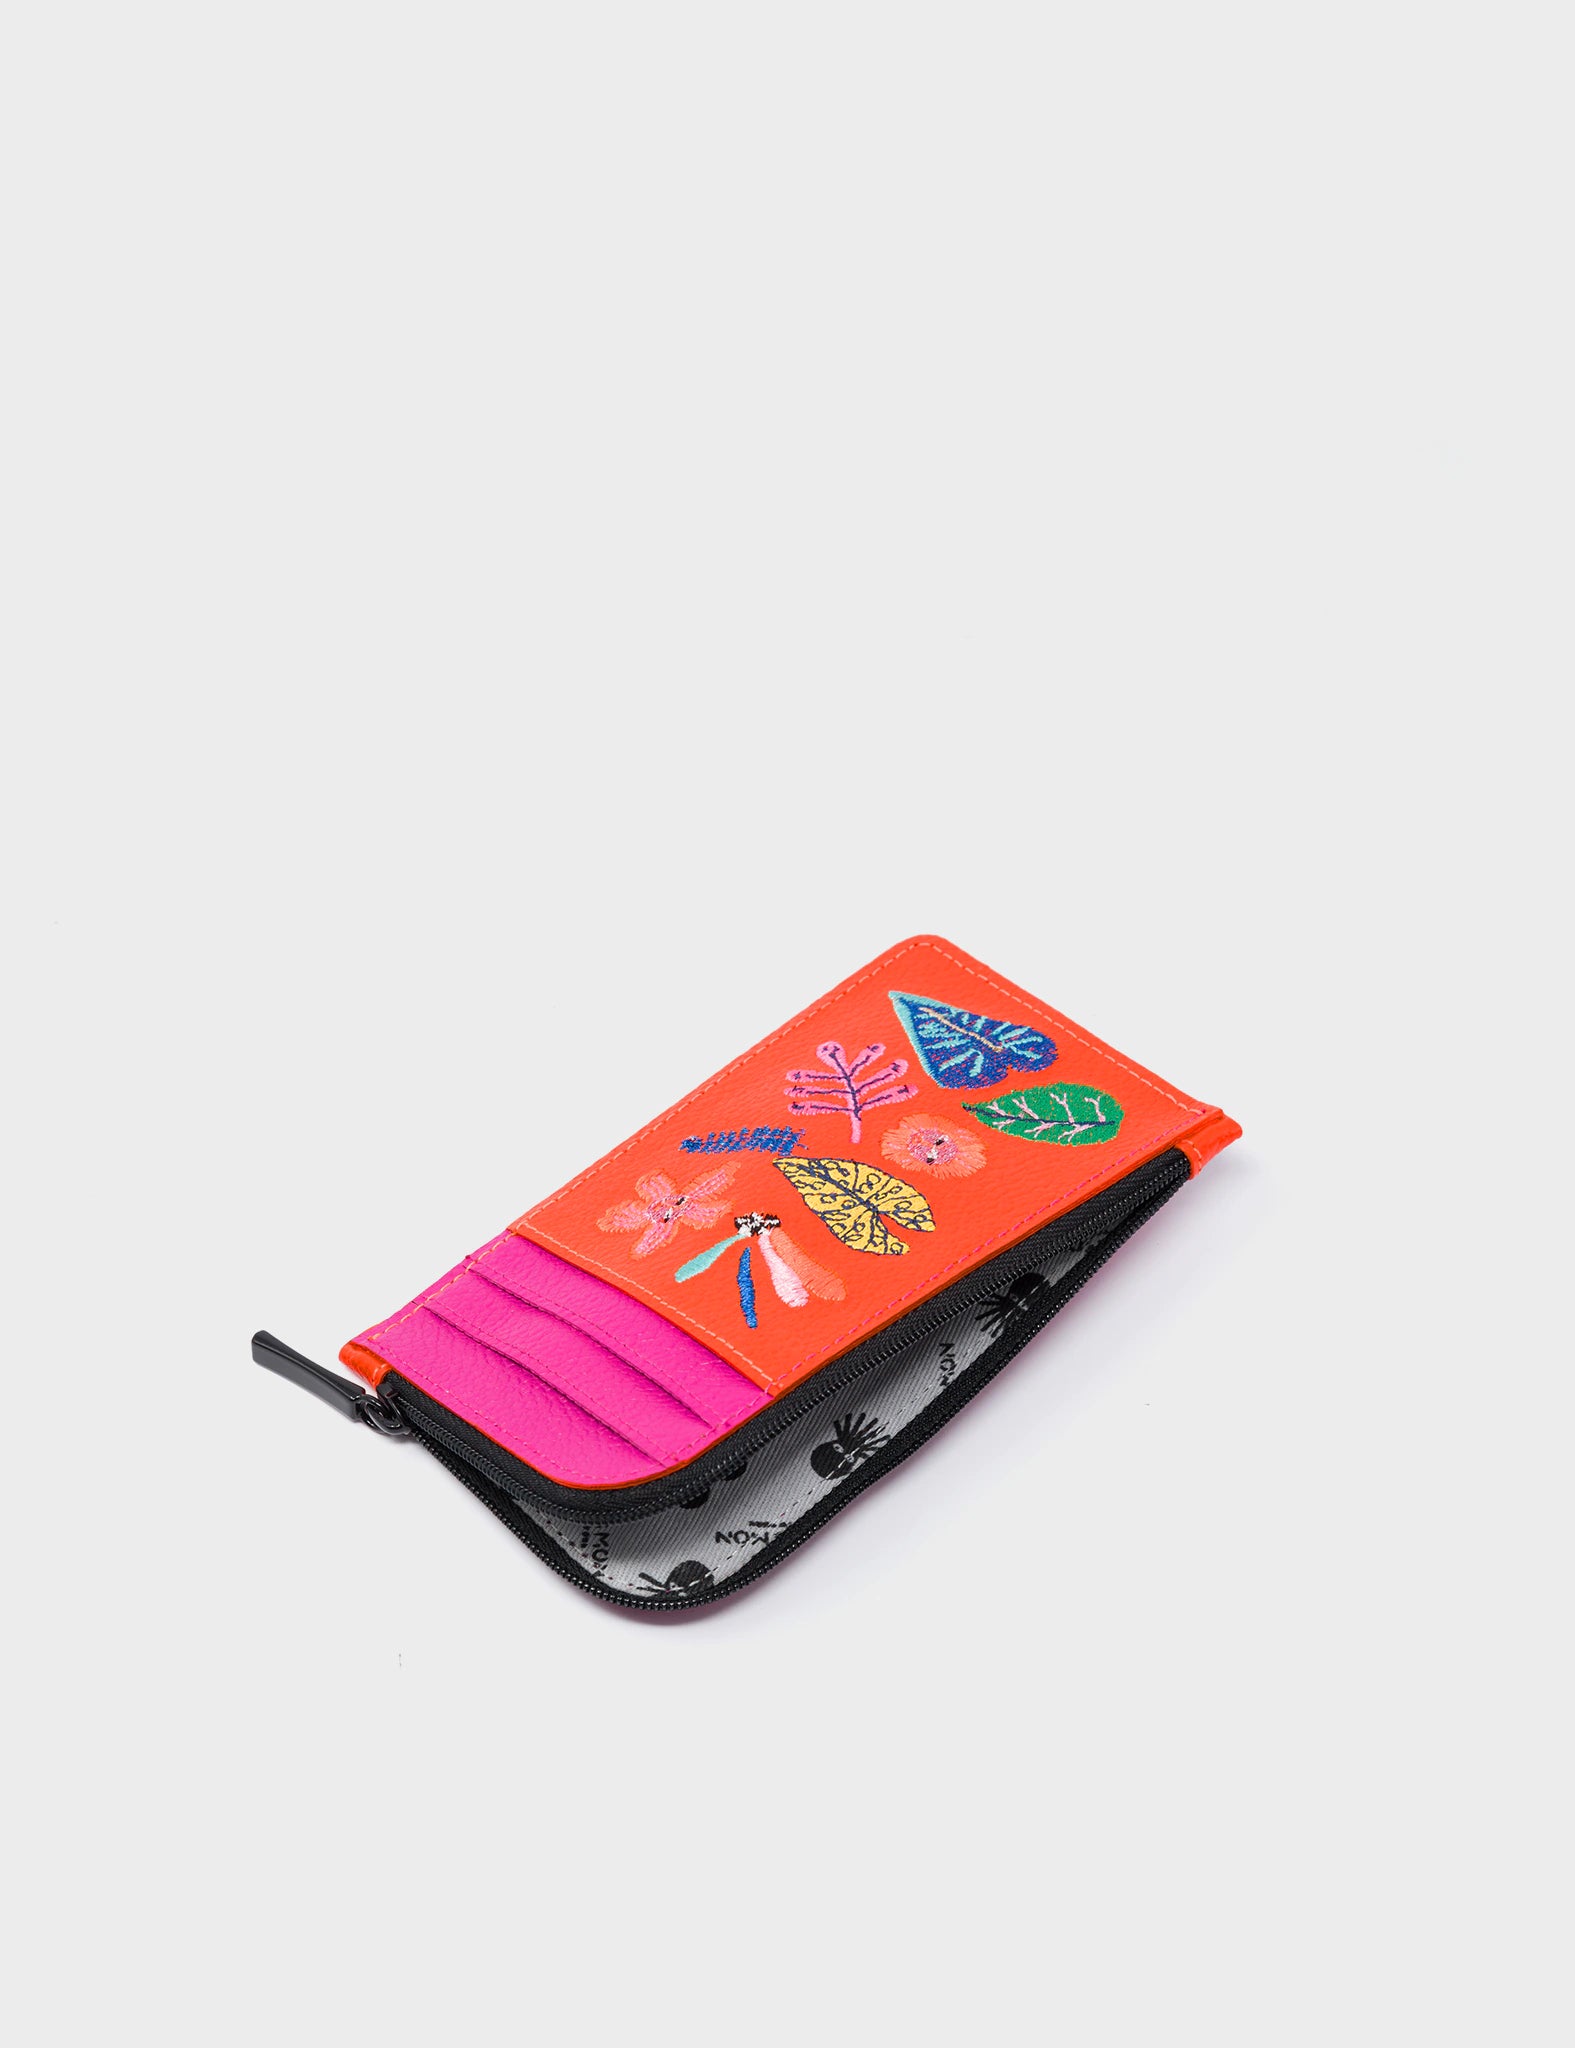 Fausto Vermillion Orange Leather  Zip-around Cardholder - El Trópico Embroidery Design - Inside